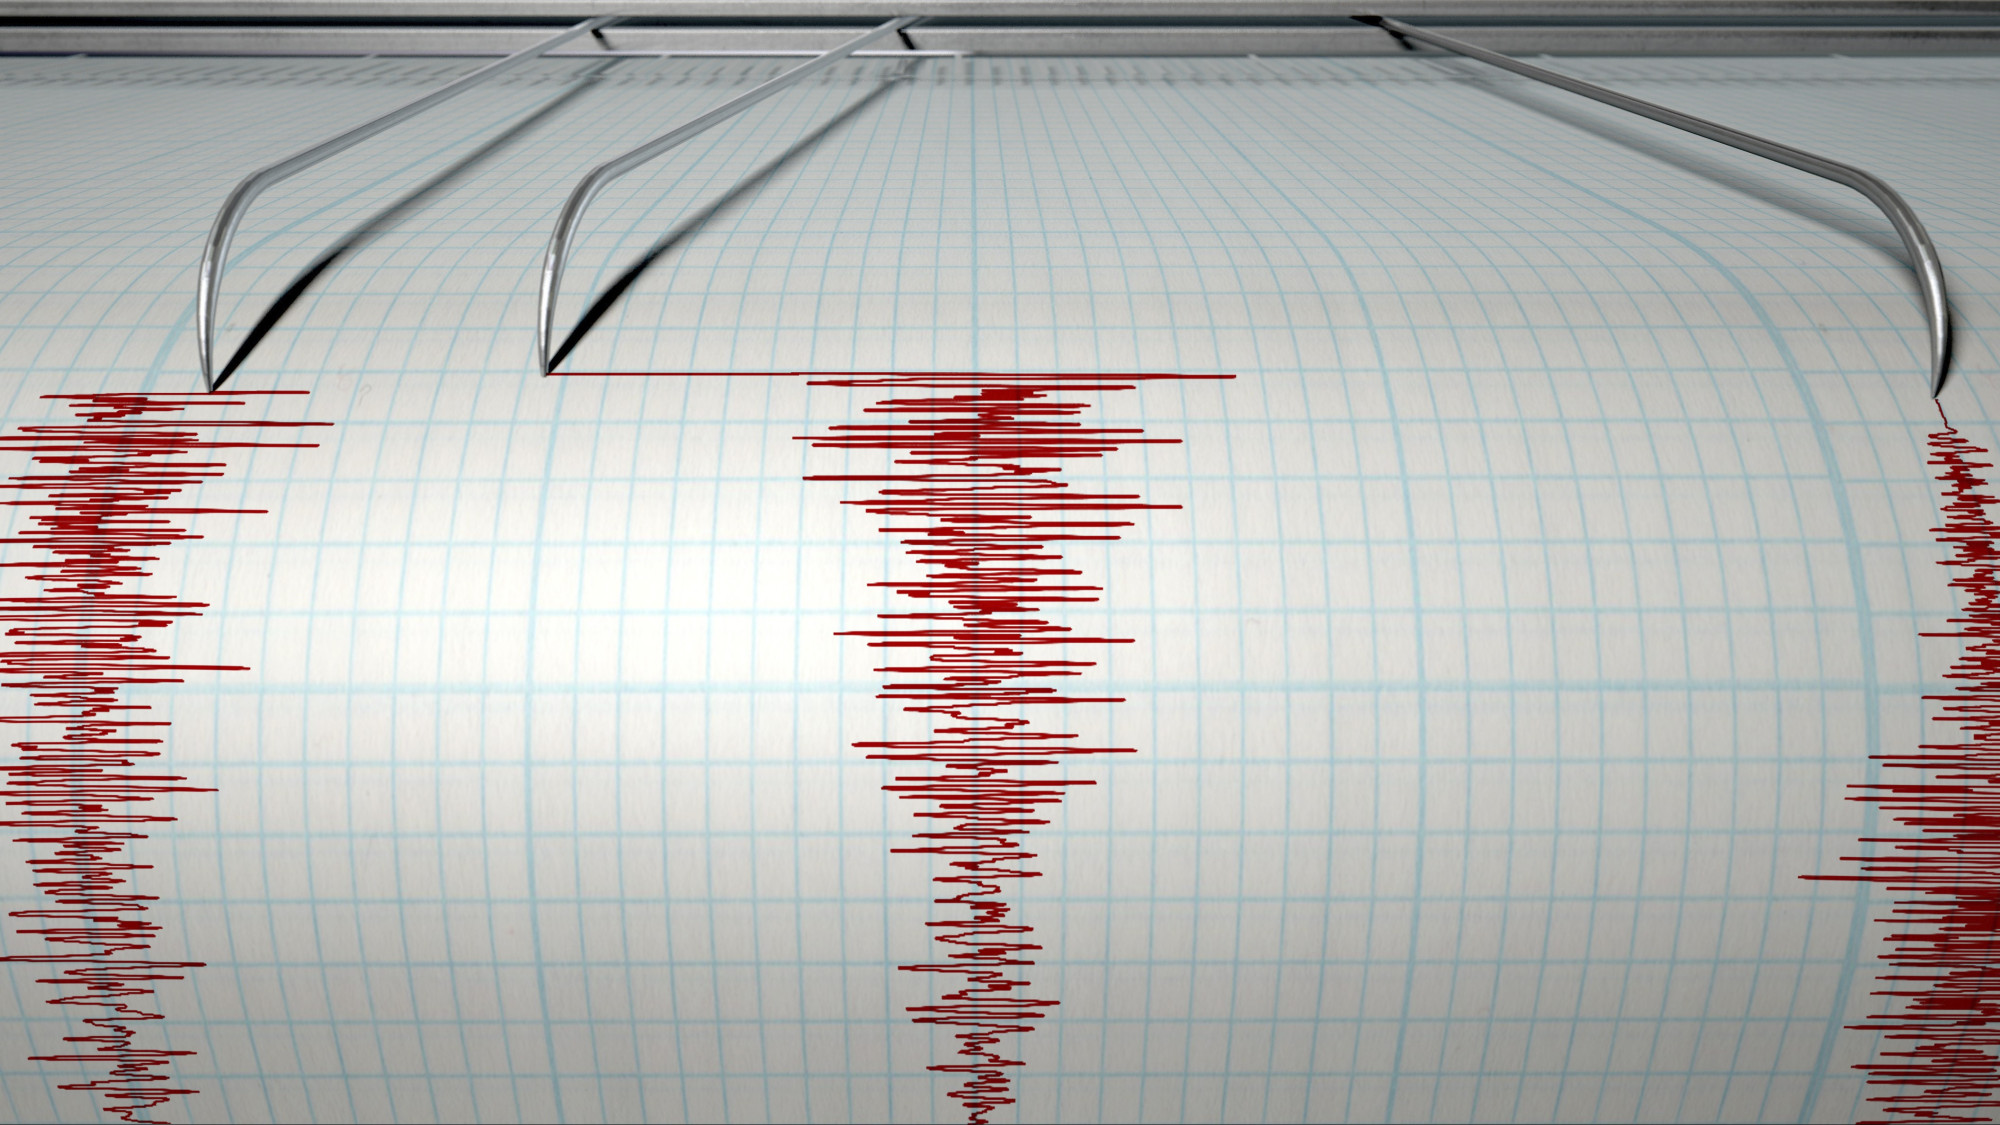 Gempa dahsyat lainnya terjadi di Tajikistan – Berita dari Armenia